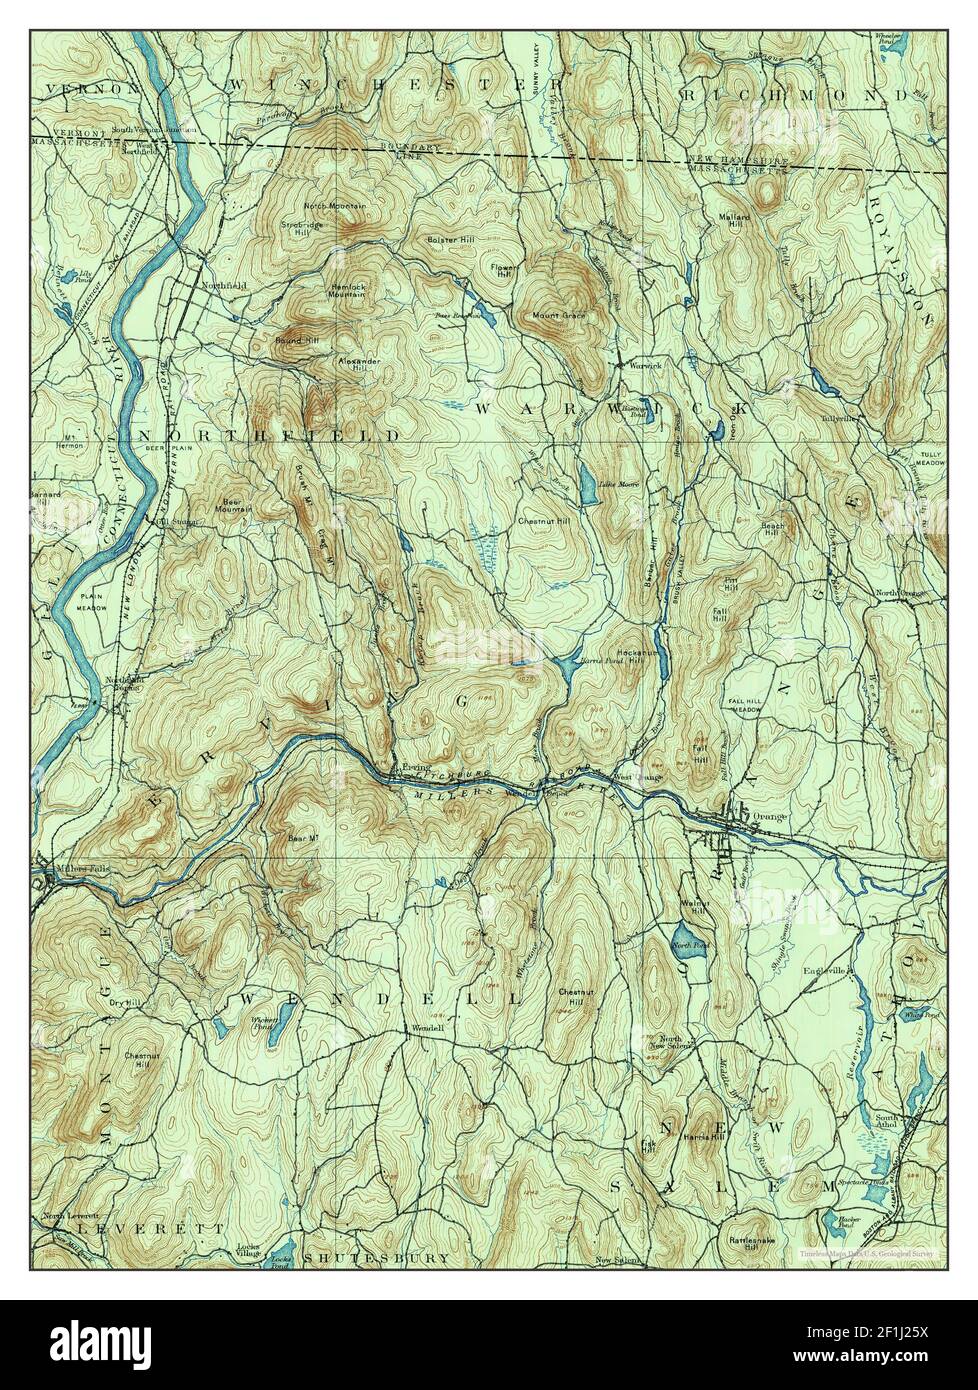 Warwick, Massachusetts, map 1889, 1:62500, United States of America by Timeless Maps, data U.S. Geological Survey Stock Photo